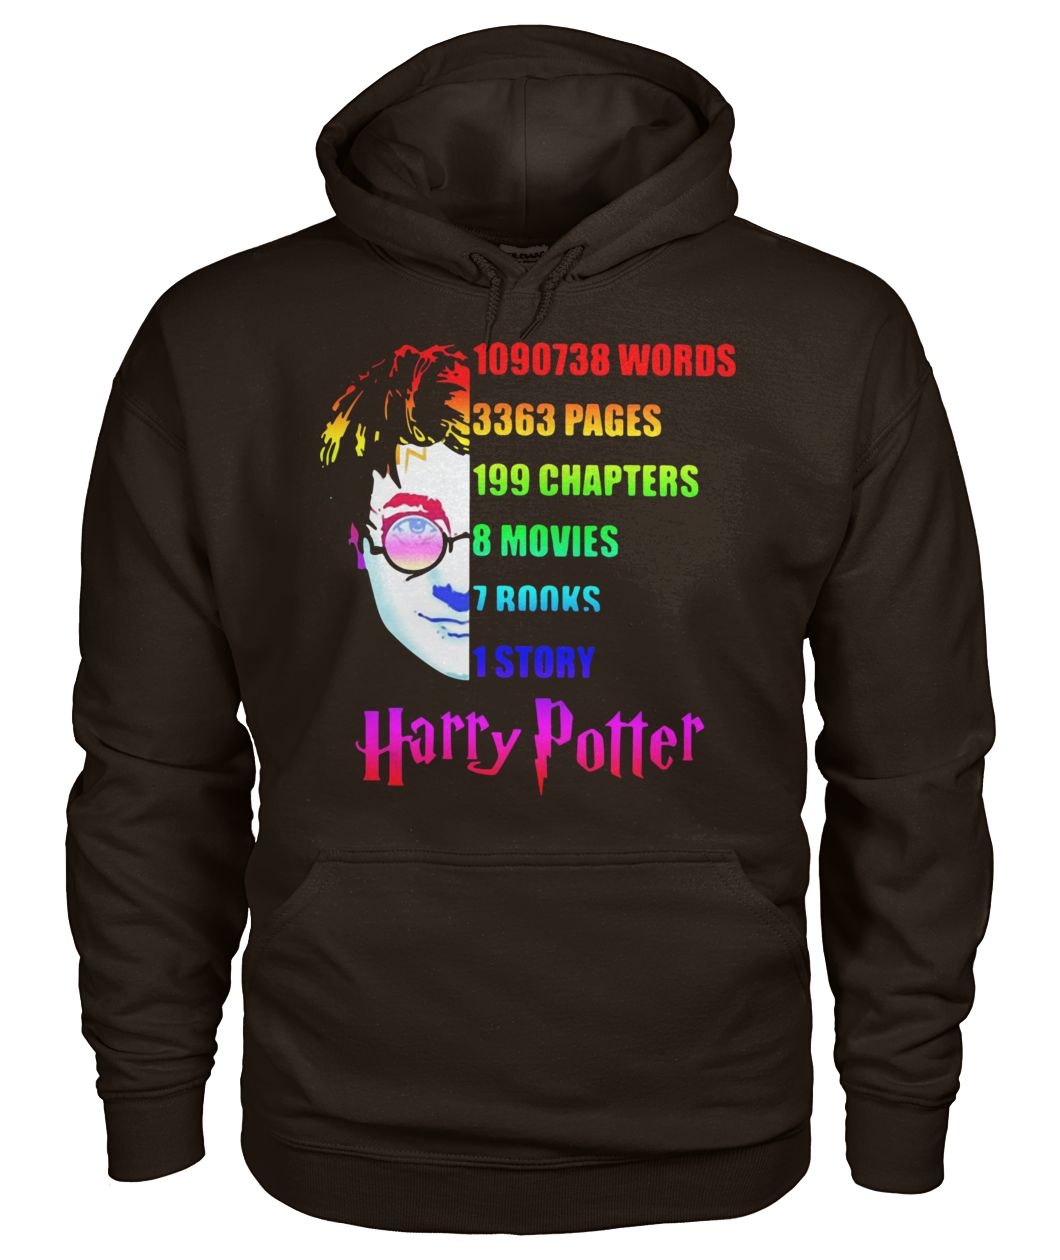 Harry potter facts infographic lgbt pride 2019 gildan hoodie